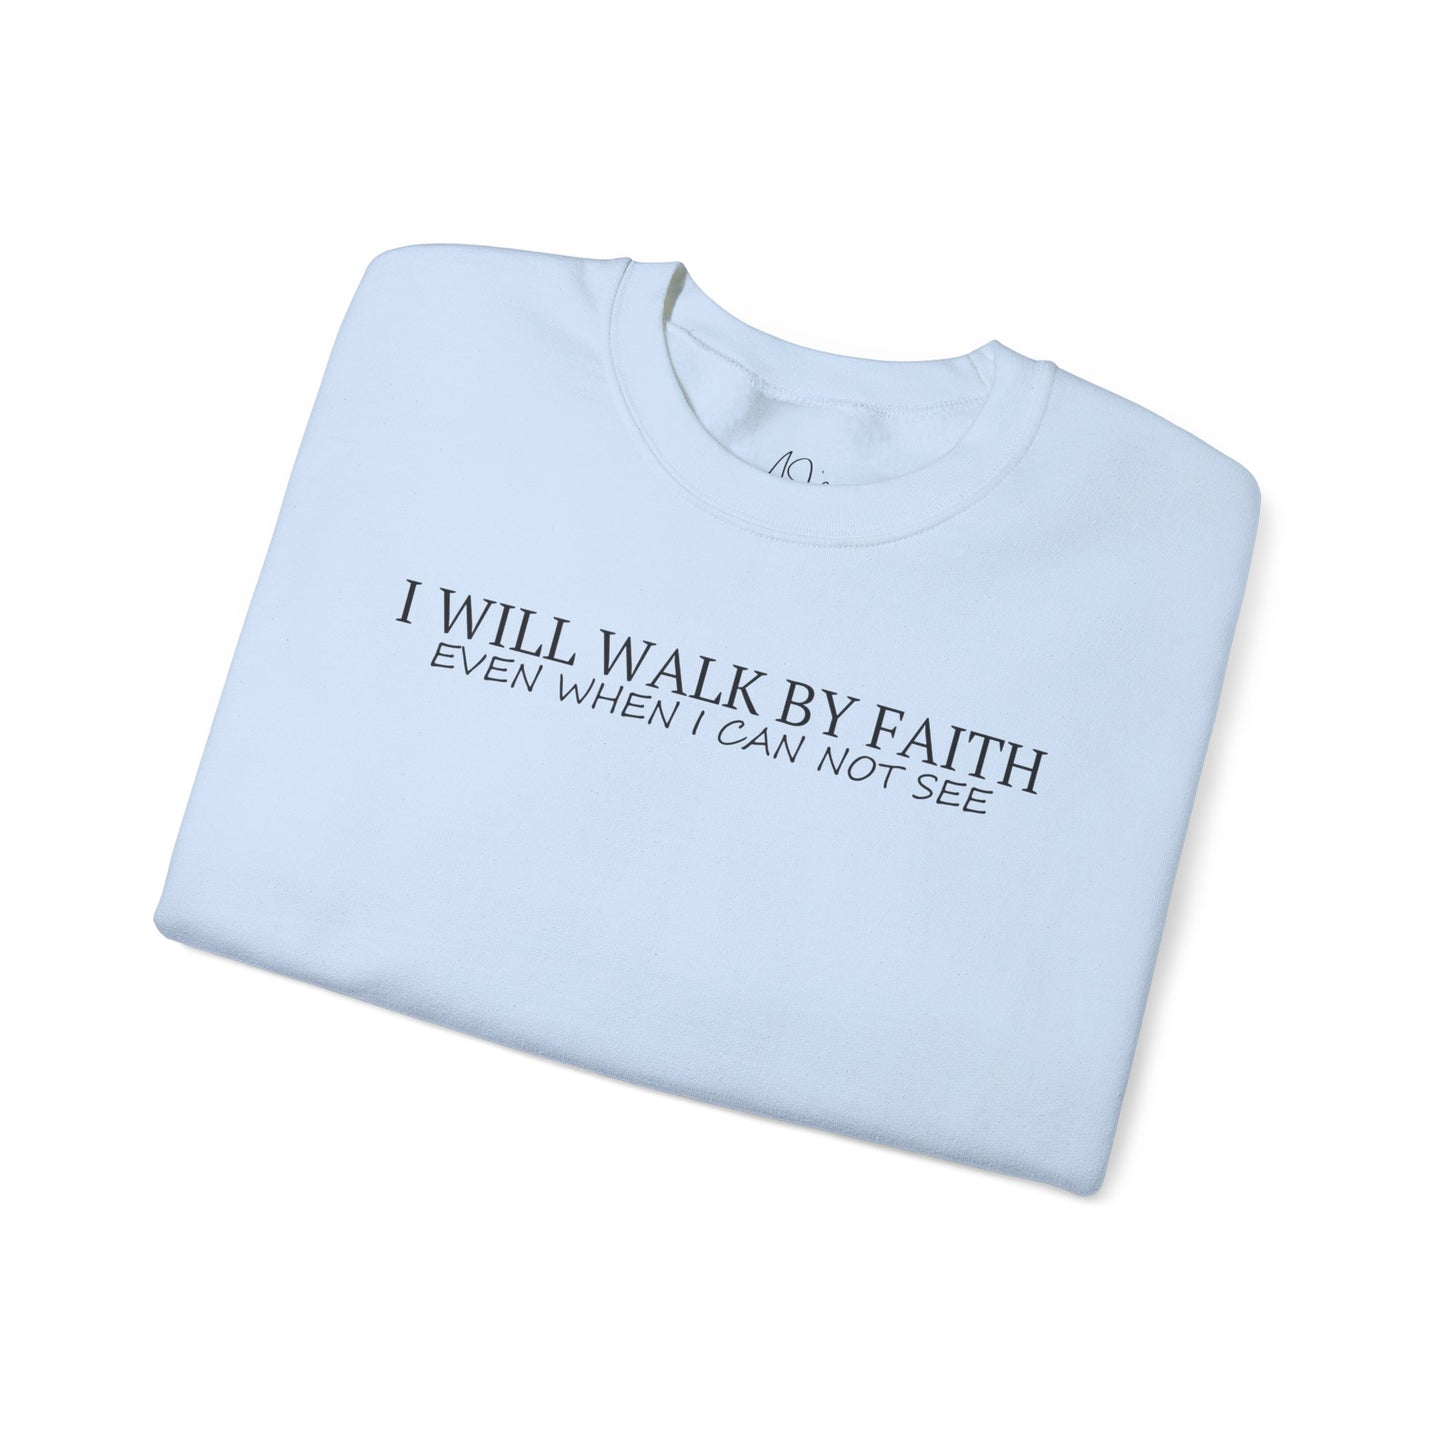 I Will Walk By Faith Sweatshirt, Christian Sweatshirts, Religious Sweatshirt, Inspirational Christian Sweatshirt, Motivational Crewneck